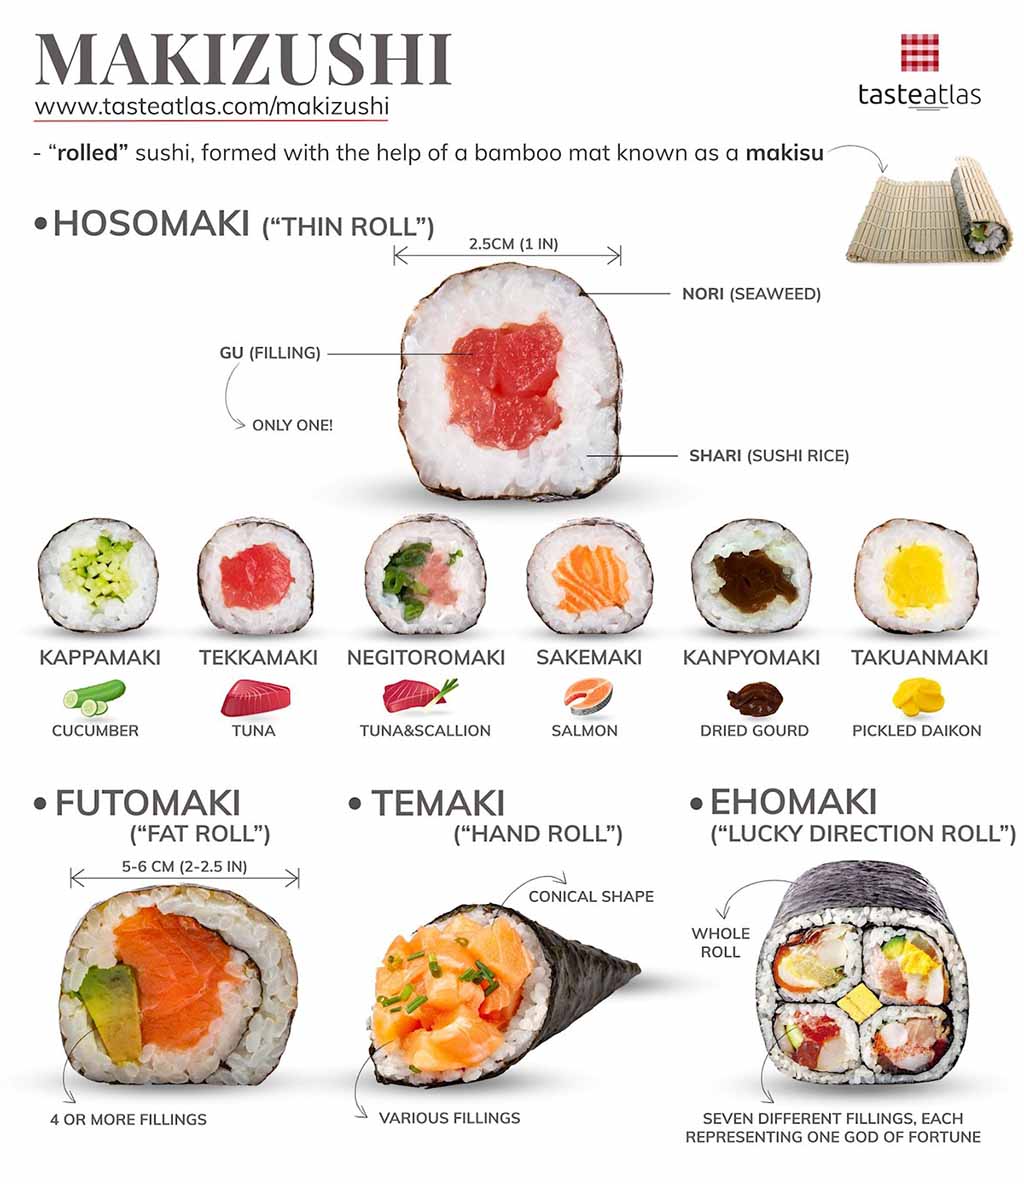 https://www.indochinatravel.com/country/japan/images/1024-makizushi-taste-atlas.jpg